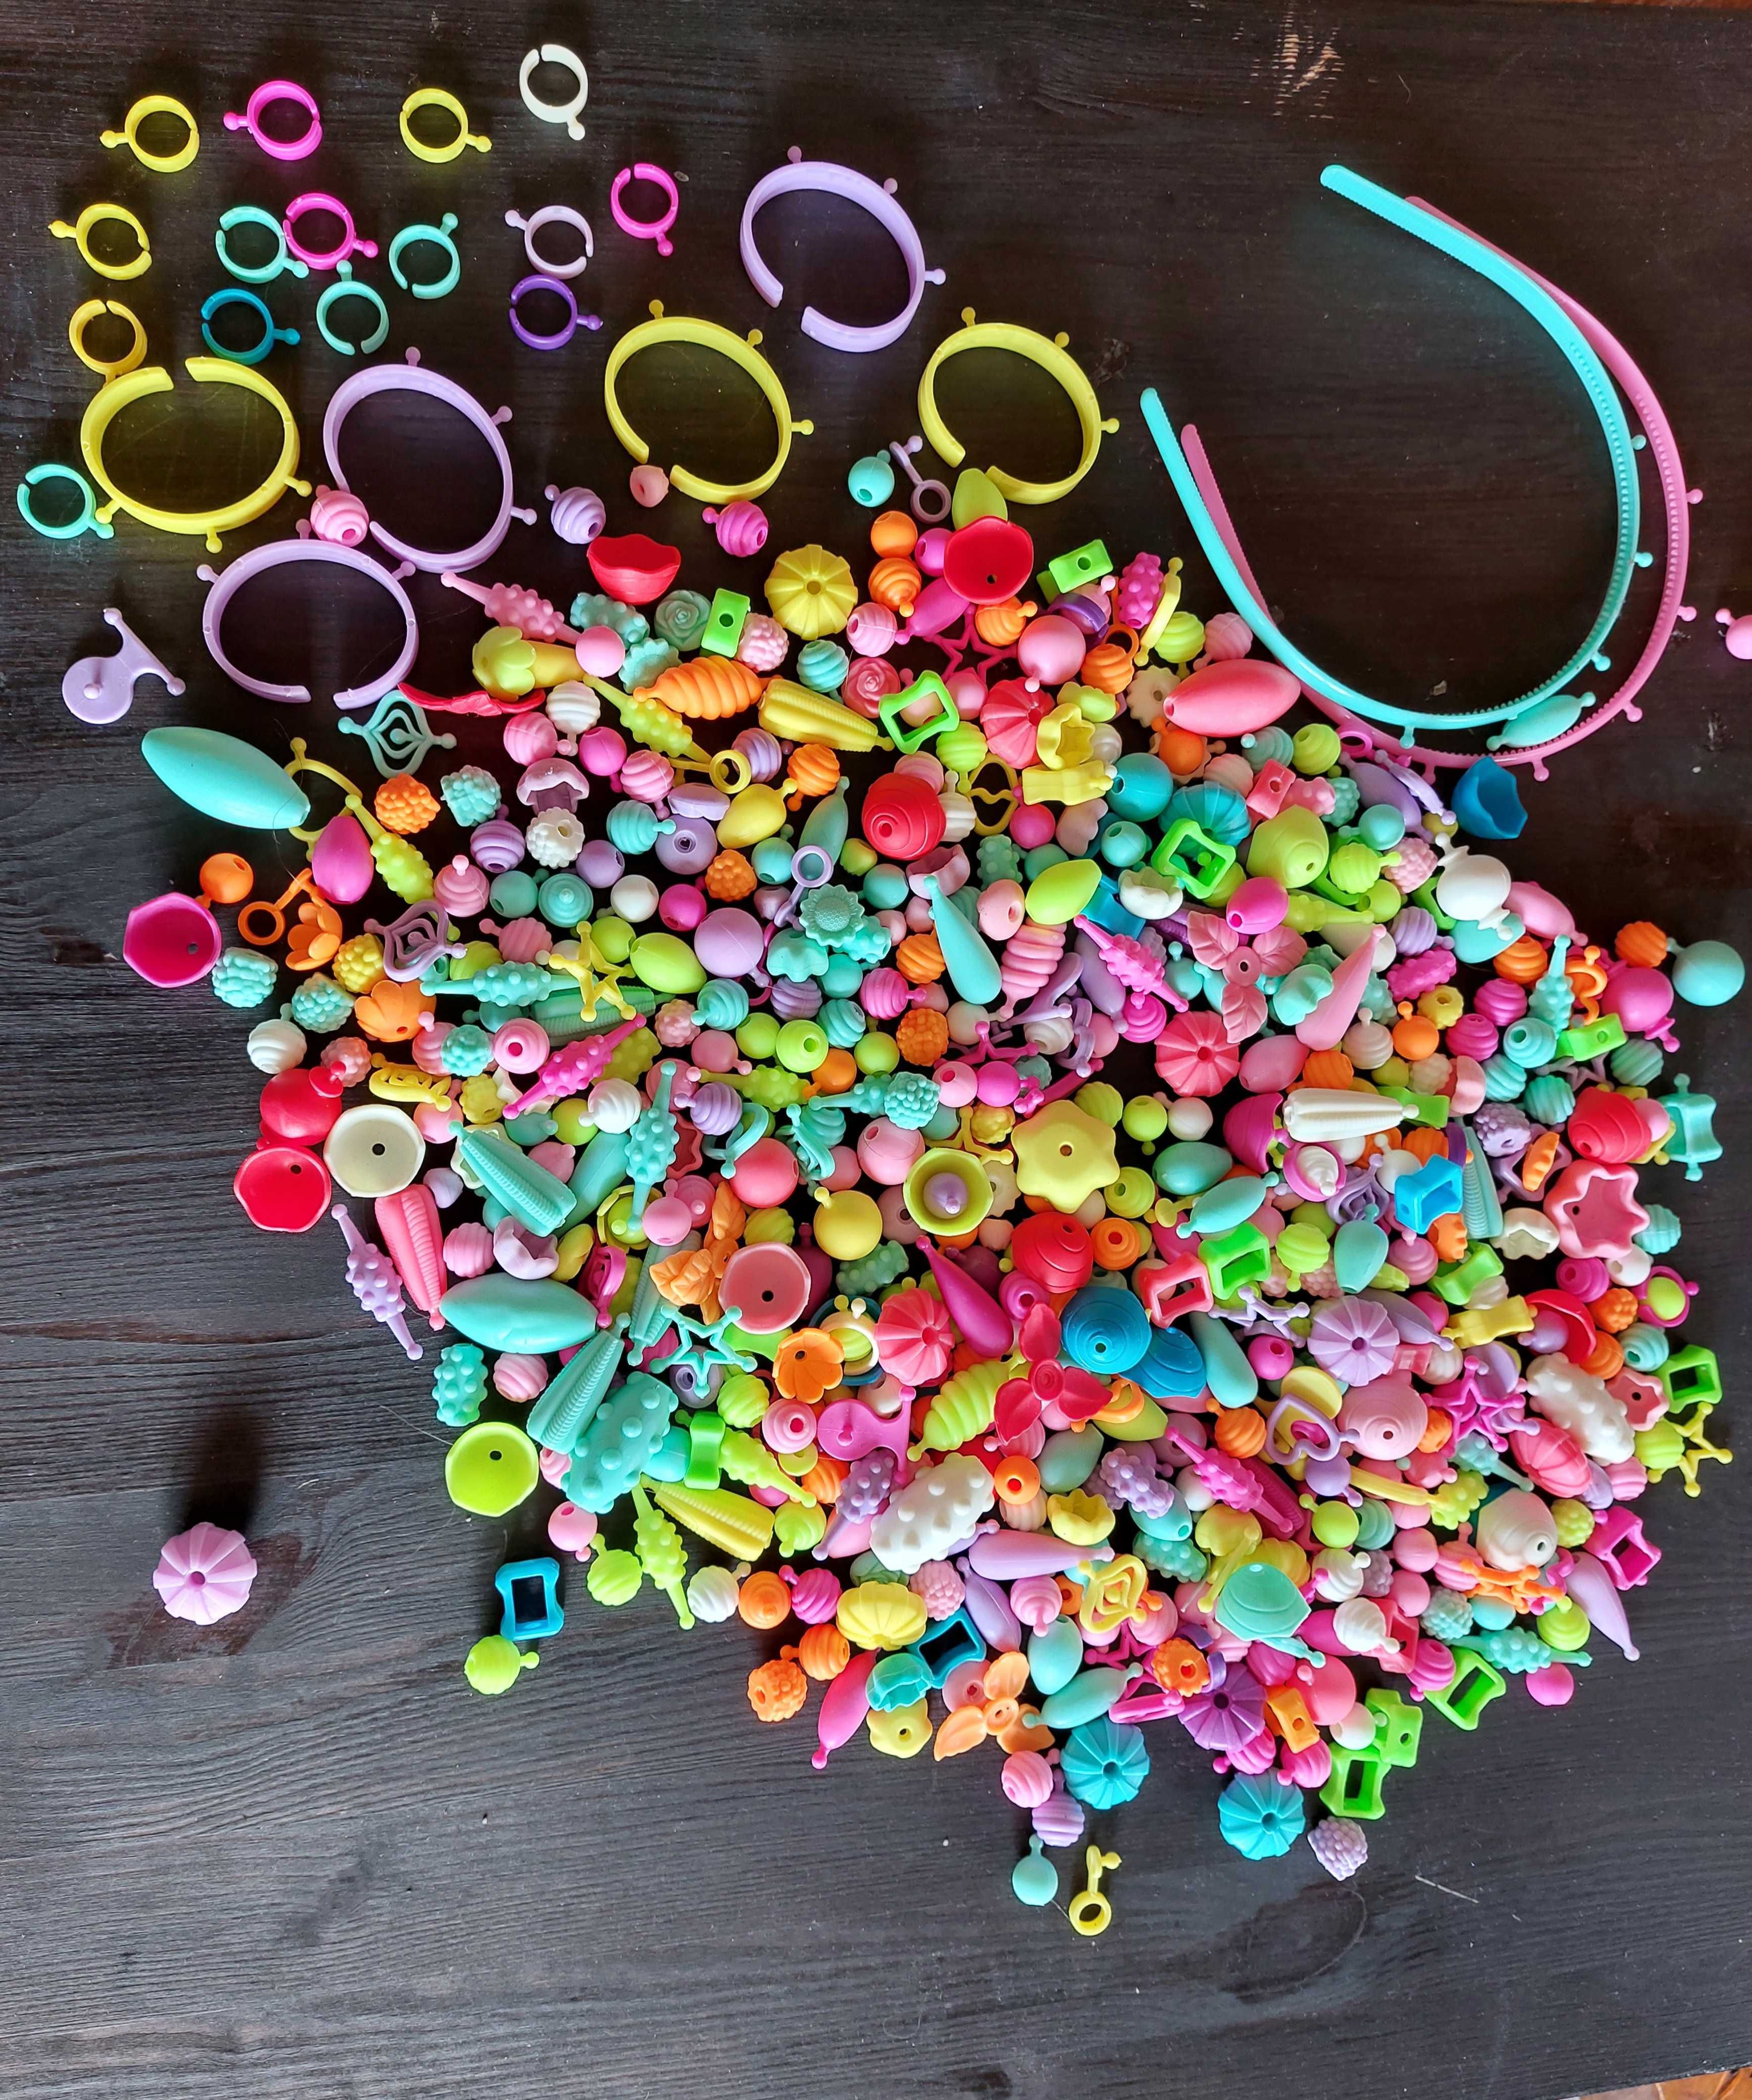 Missangas plastico colares pulseiras idade 3 anos